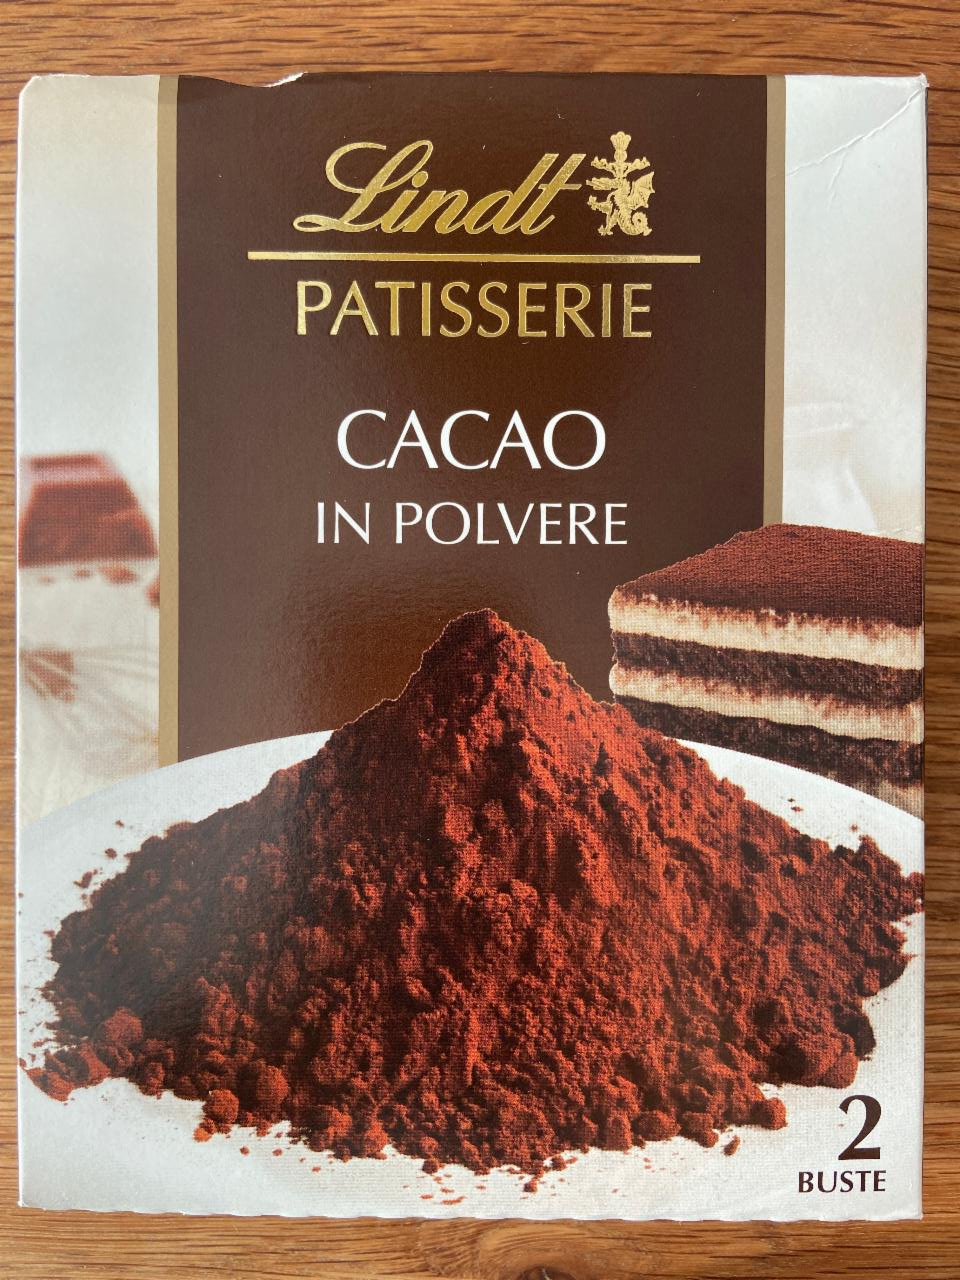 Fotografie - Cacao in polvere Lindt